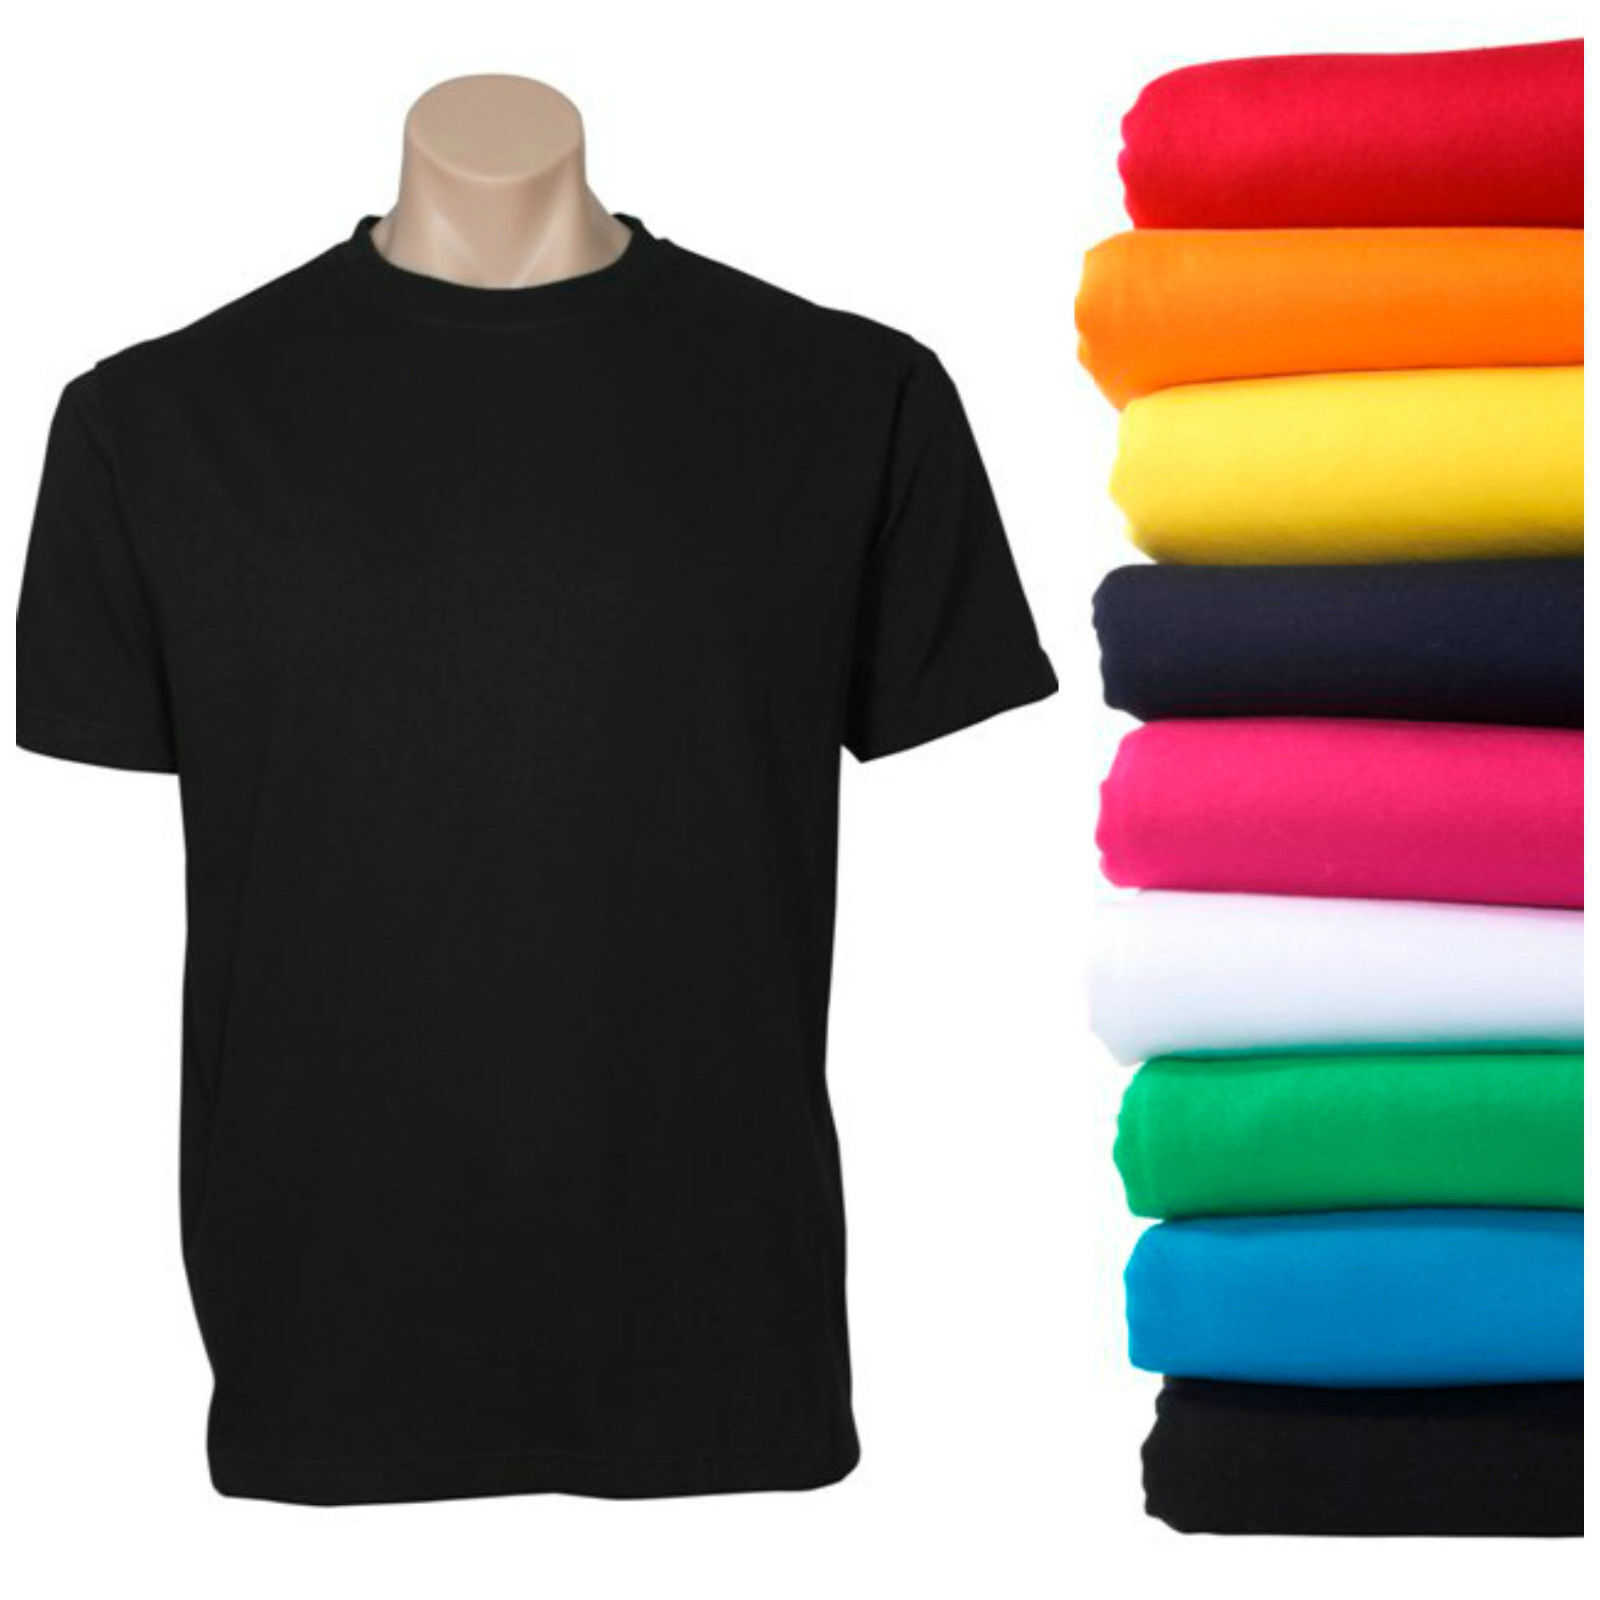 Lisa 100% Básica Blanca Camiseta Para Hombre Informal A GRANEL XS-5XL Adultos | eBay